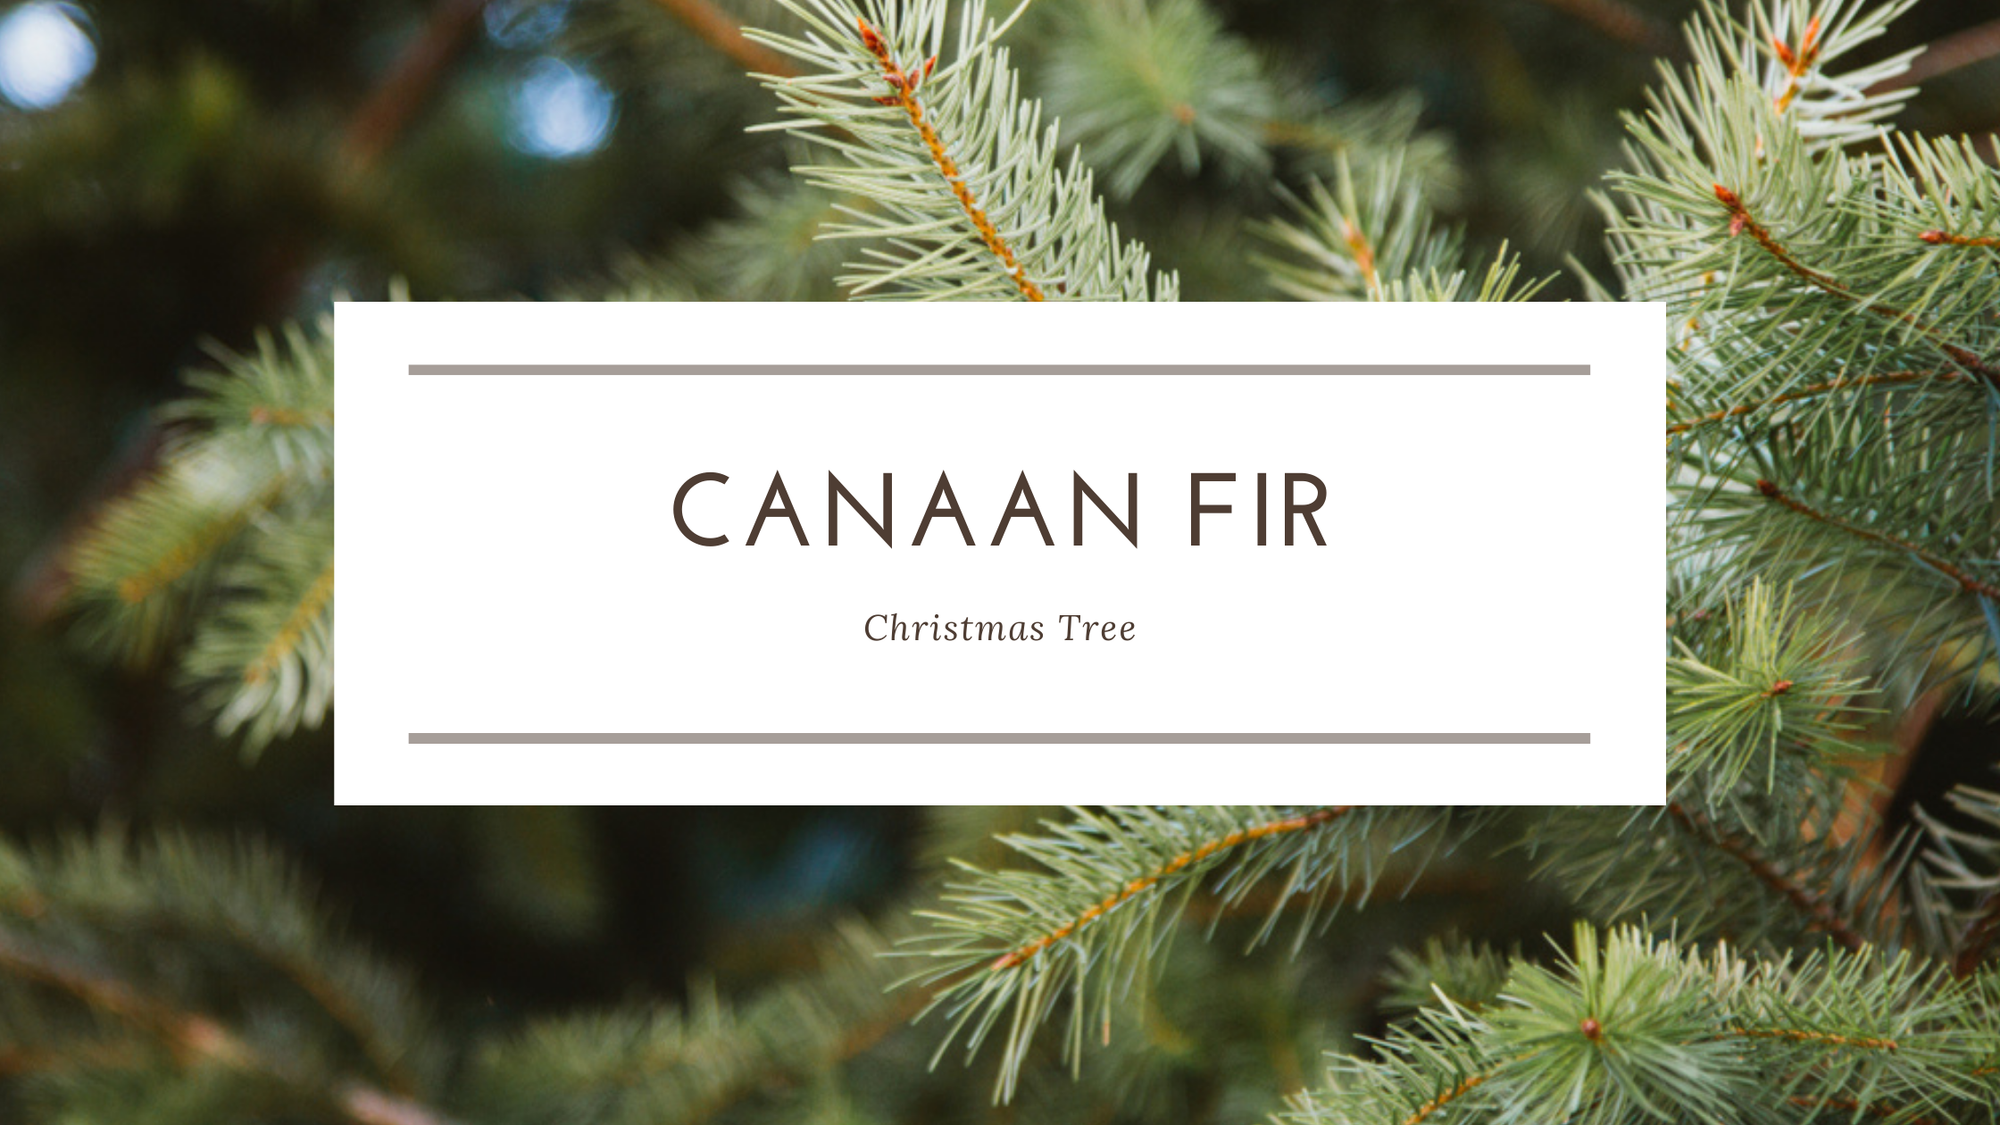 Canaan Fir Christmas Tree